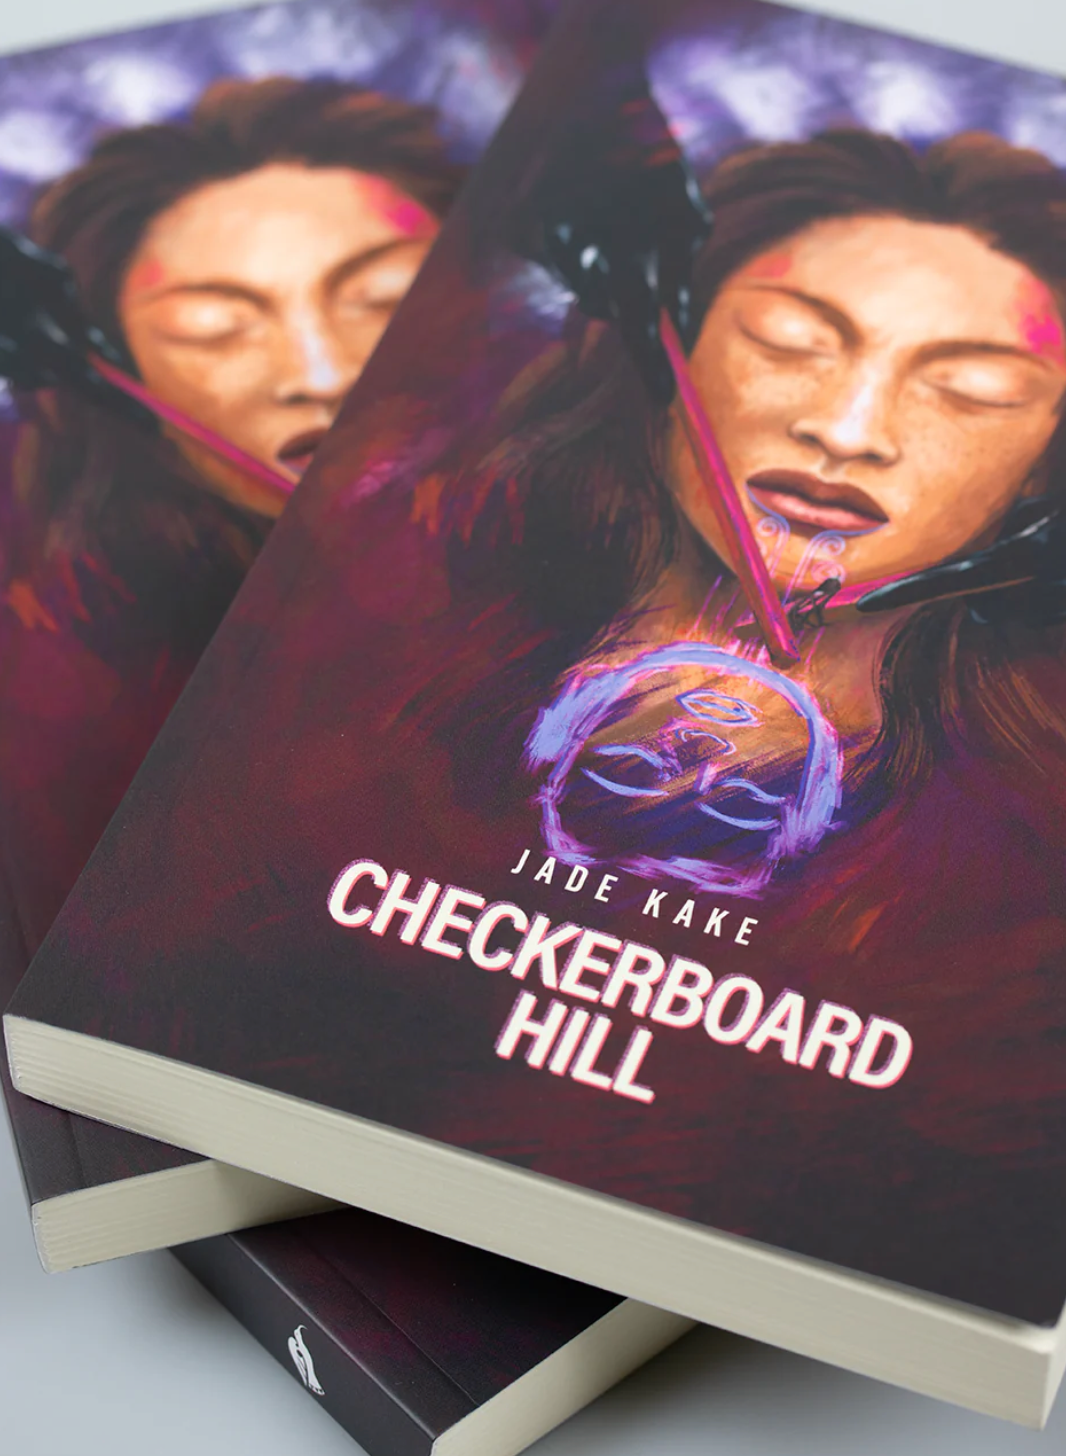 Checkerboard Hill by Jade Kake